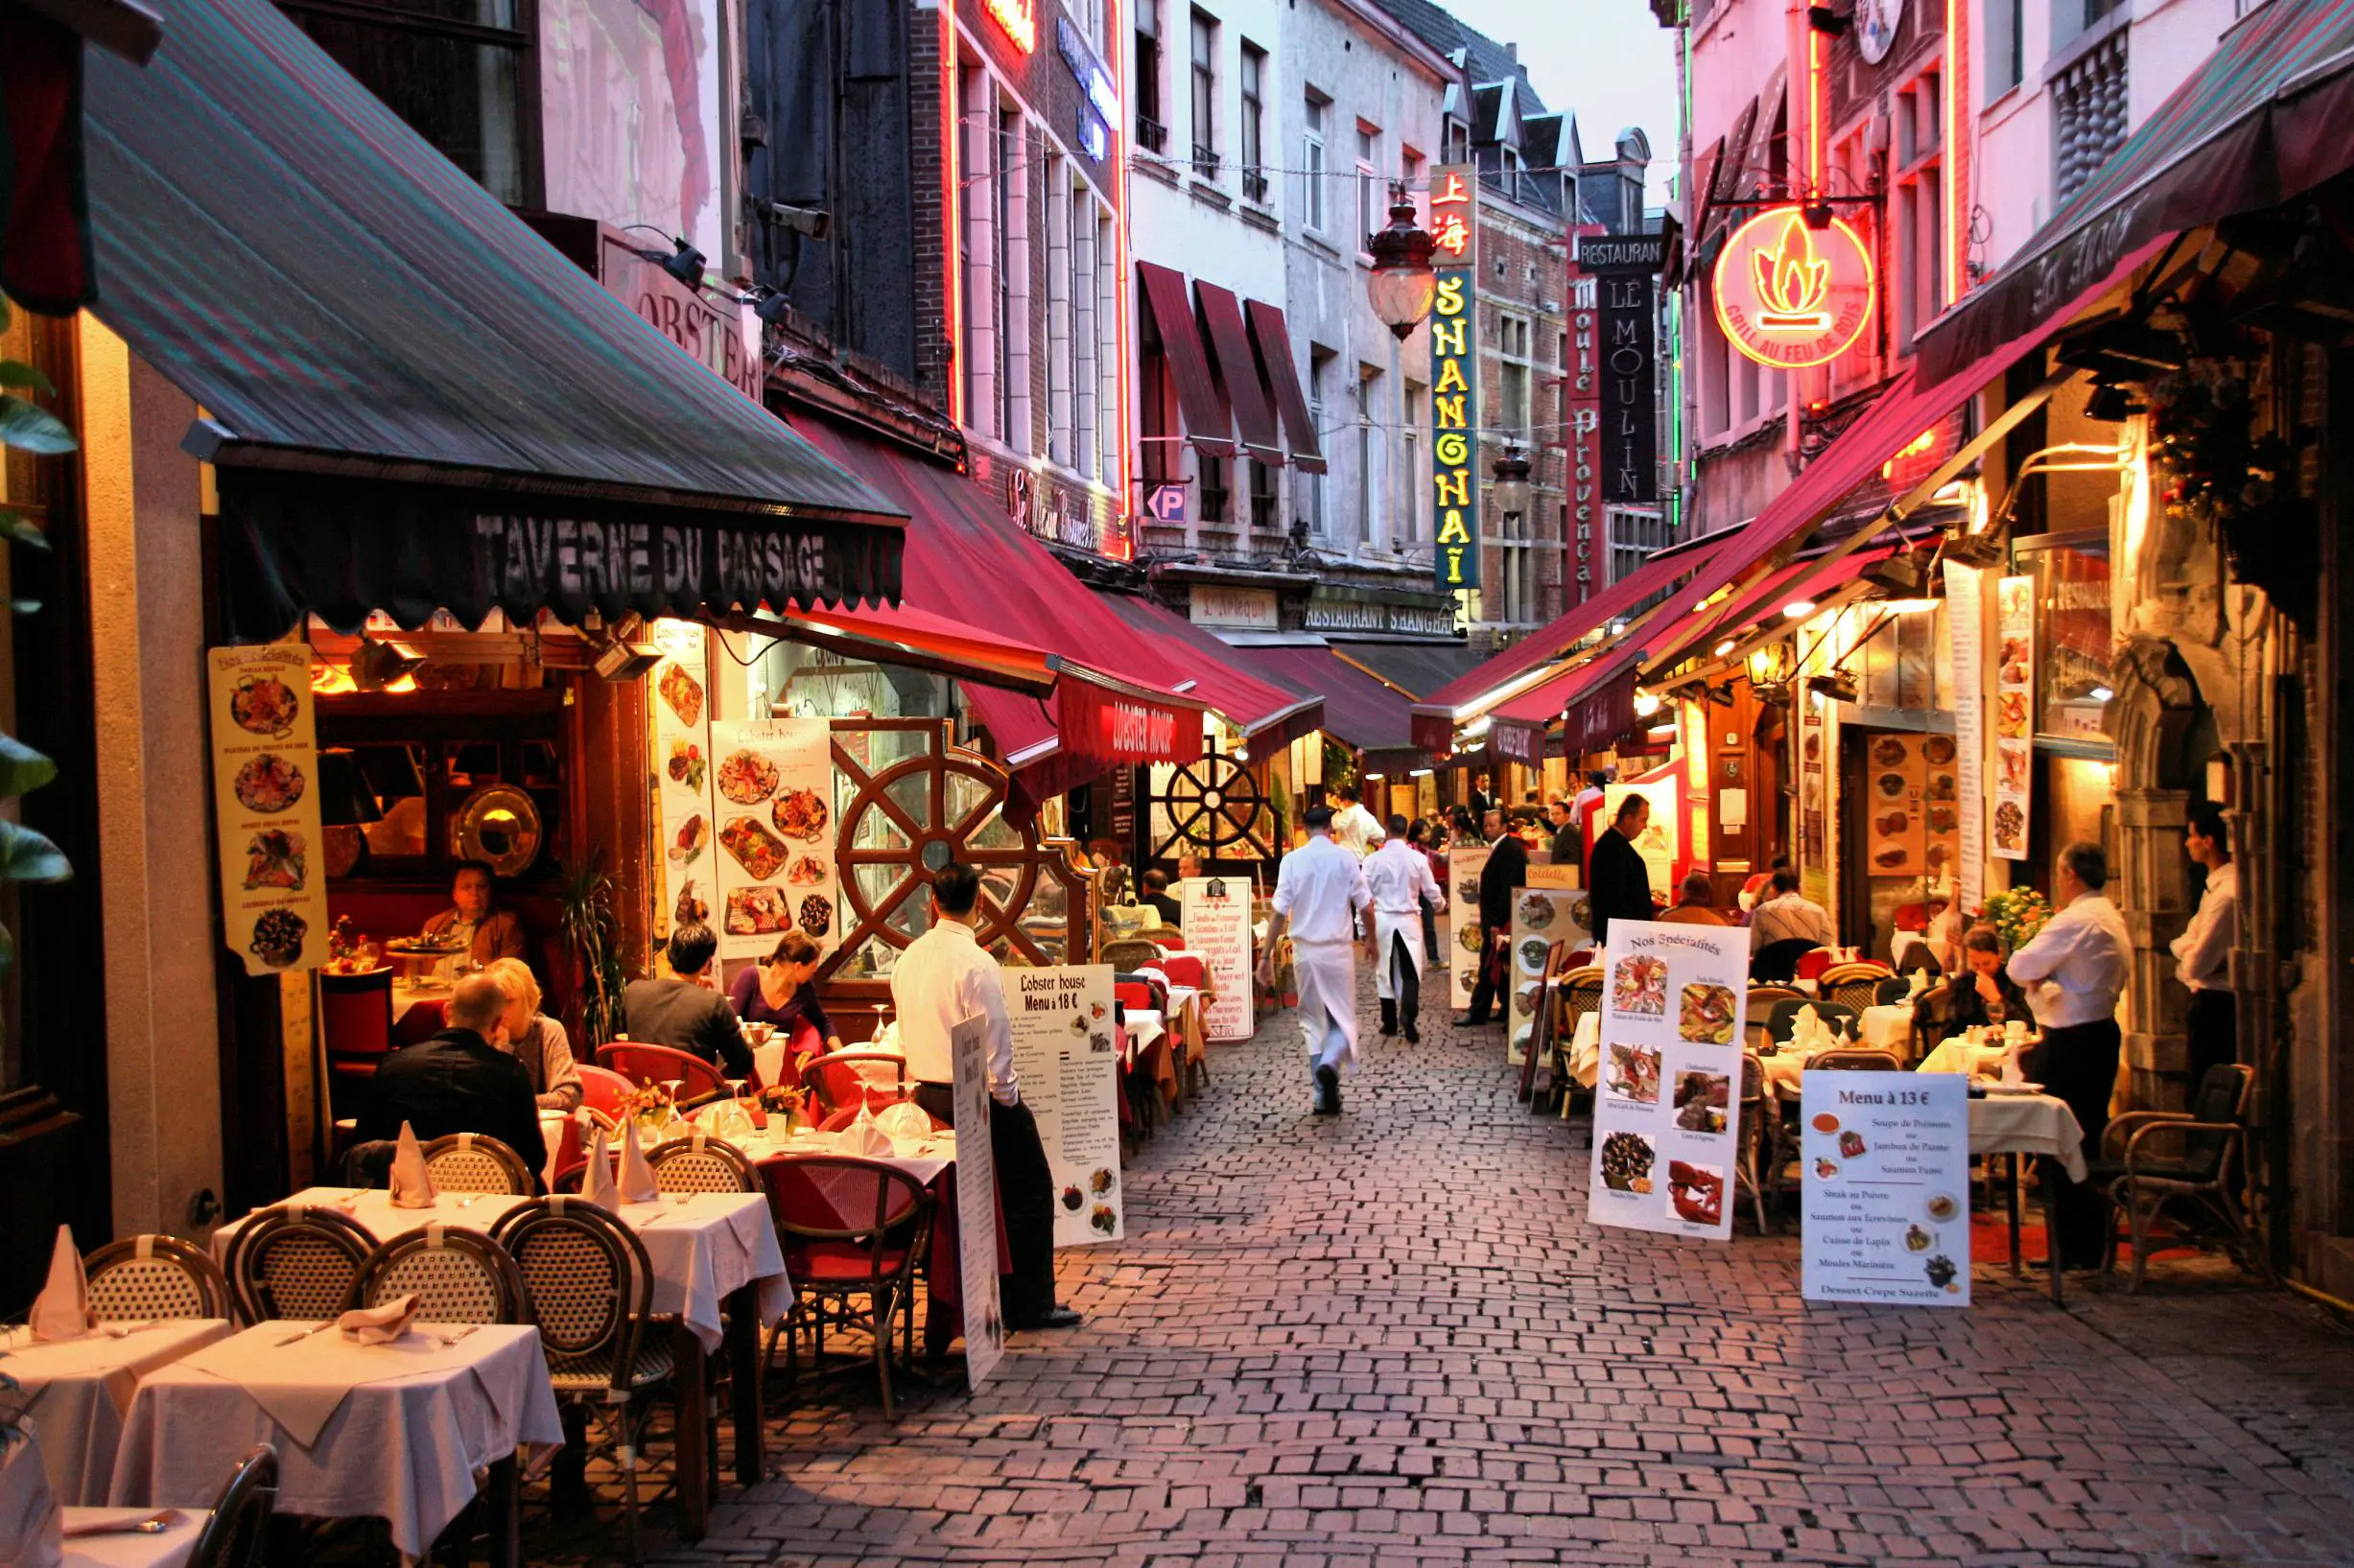 Typical scene in a street full of restaurants in Brussels